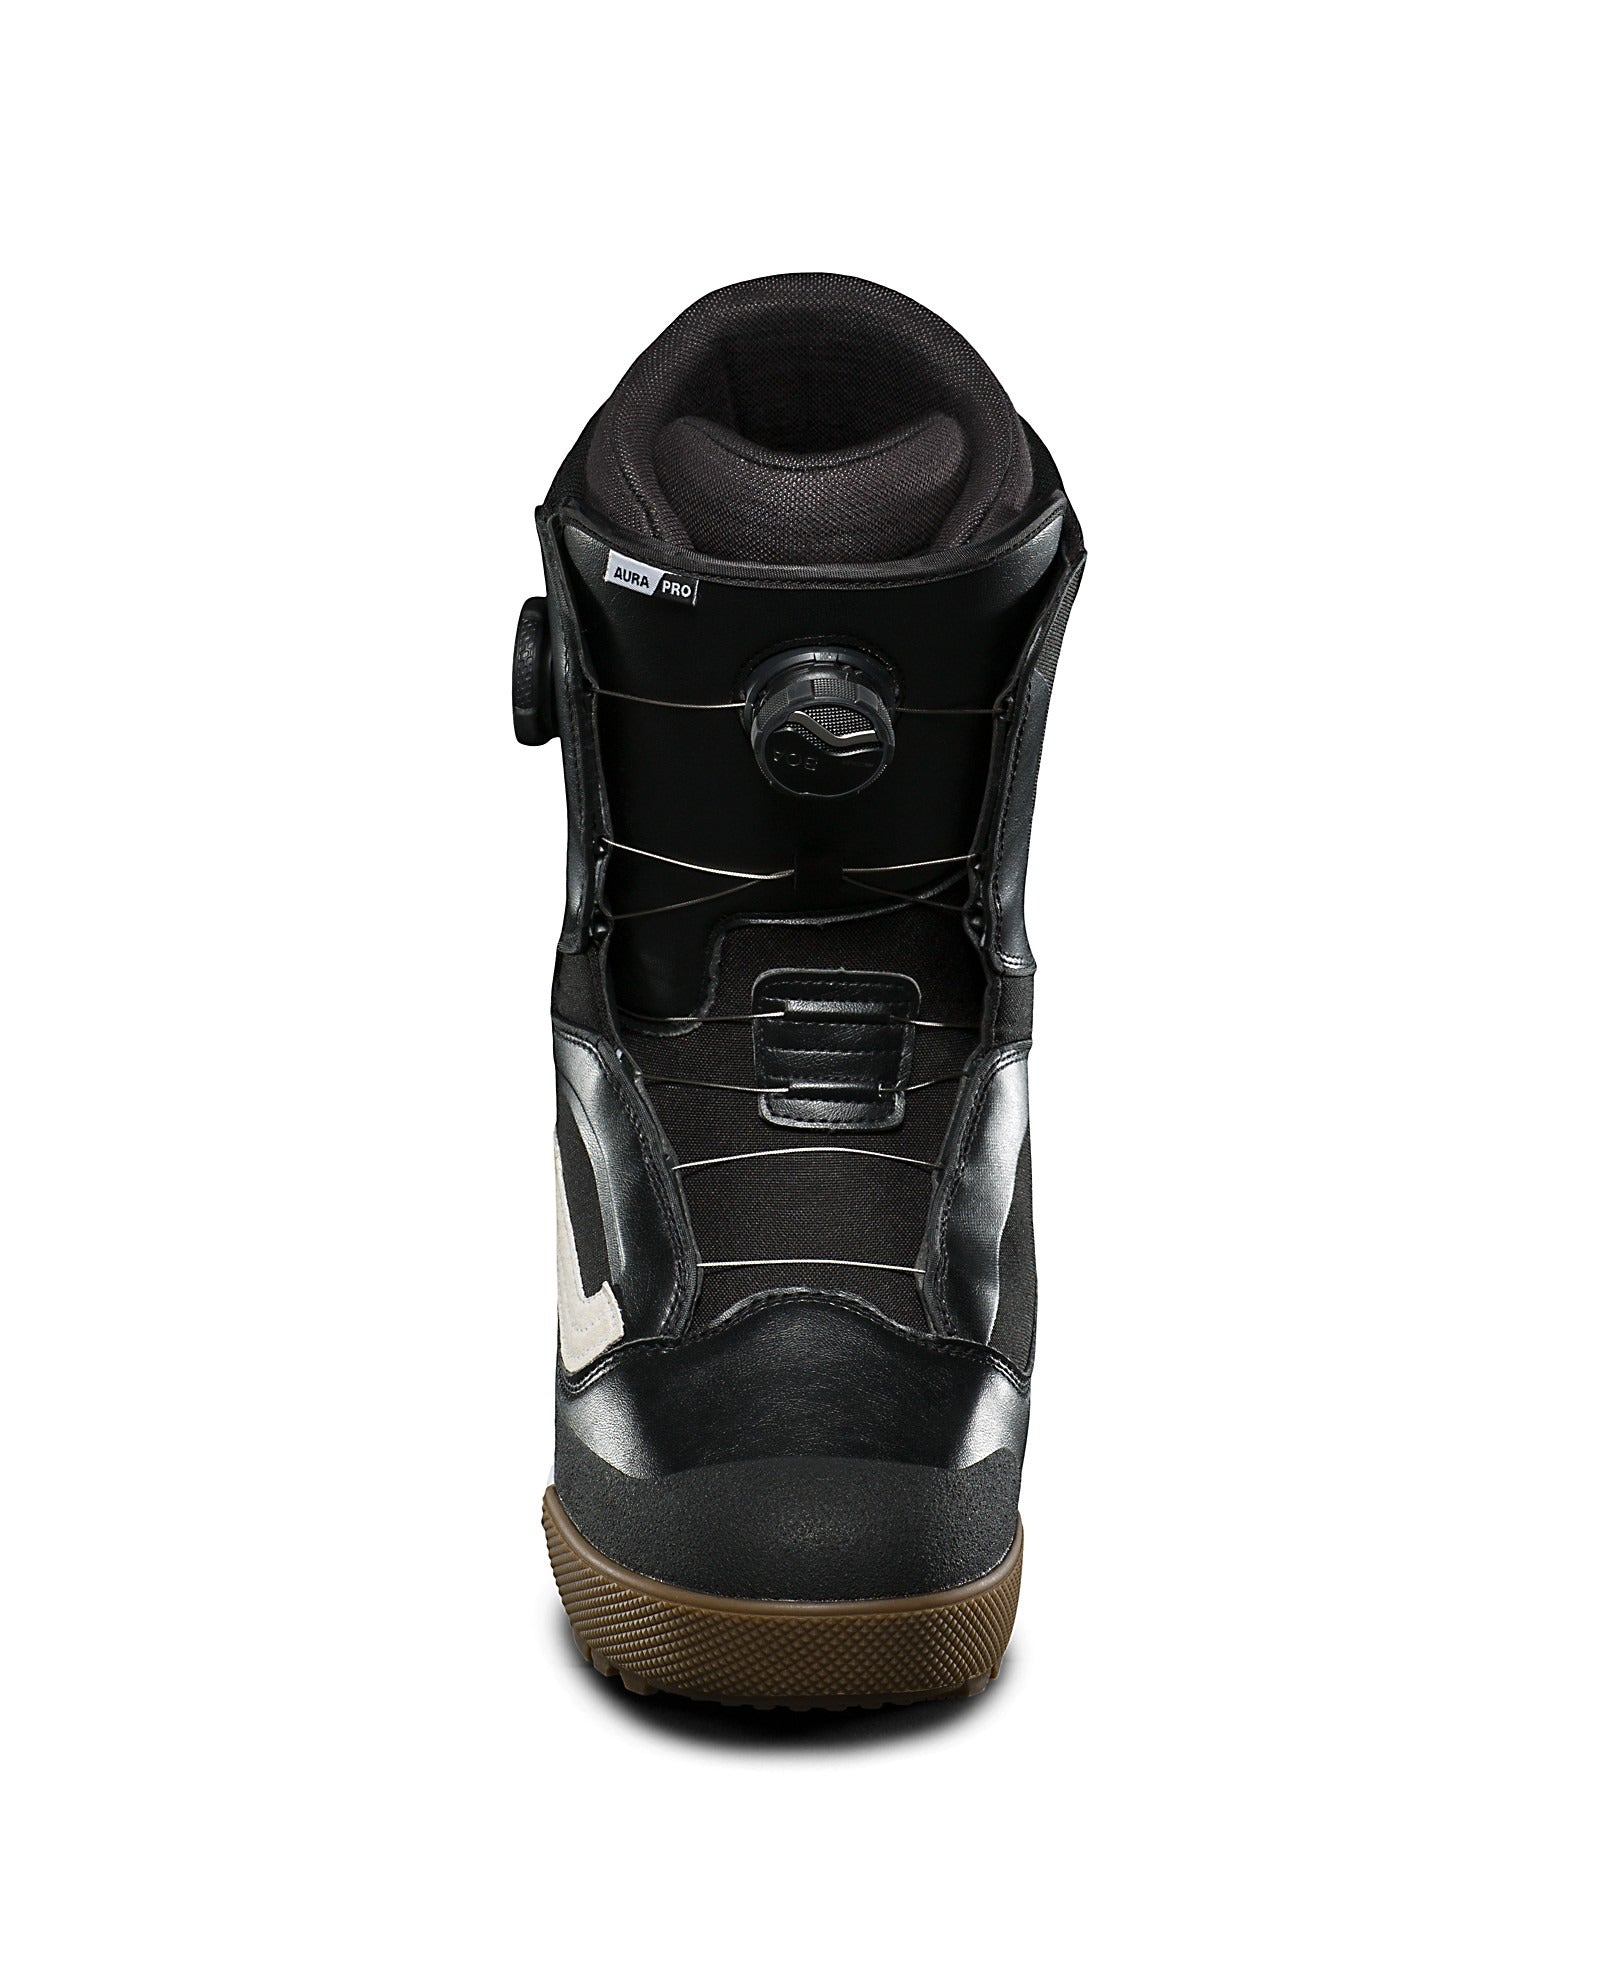 Aura Pro Snowboard Boots